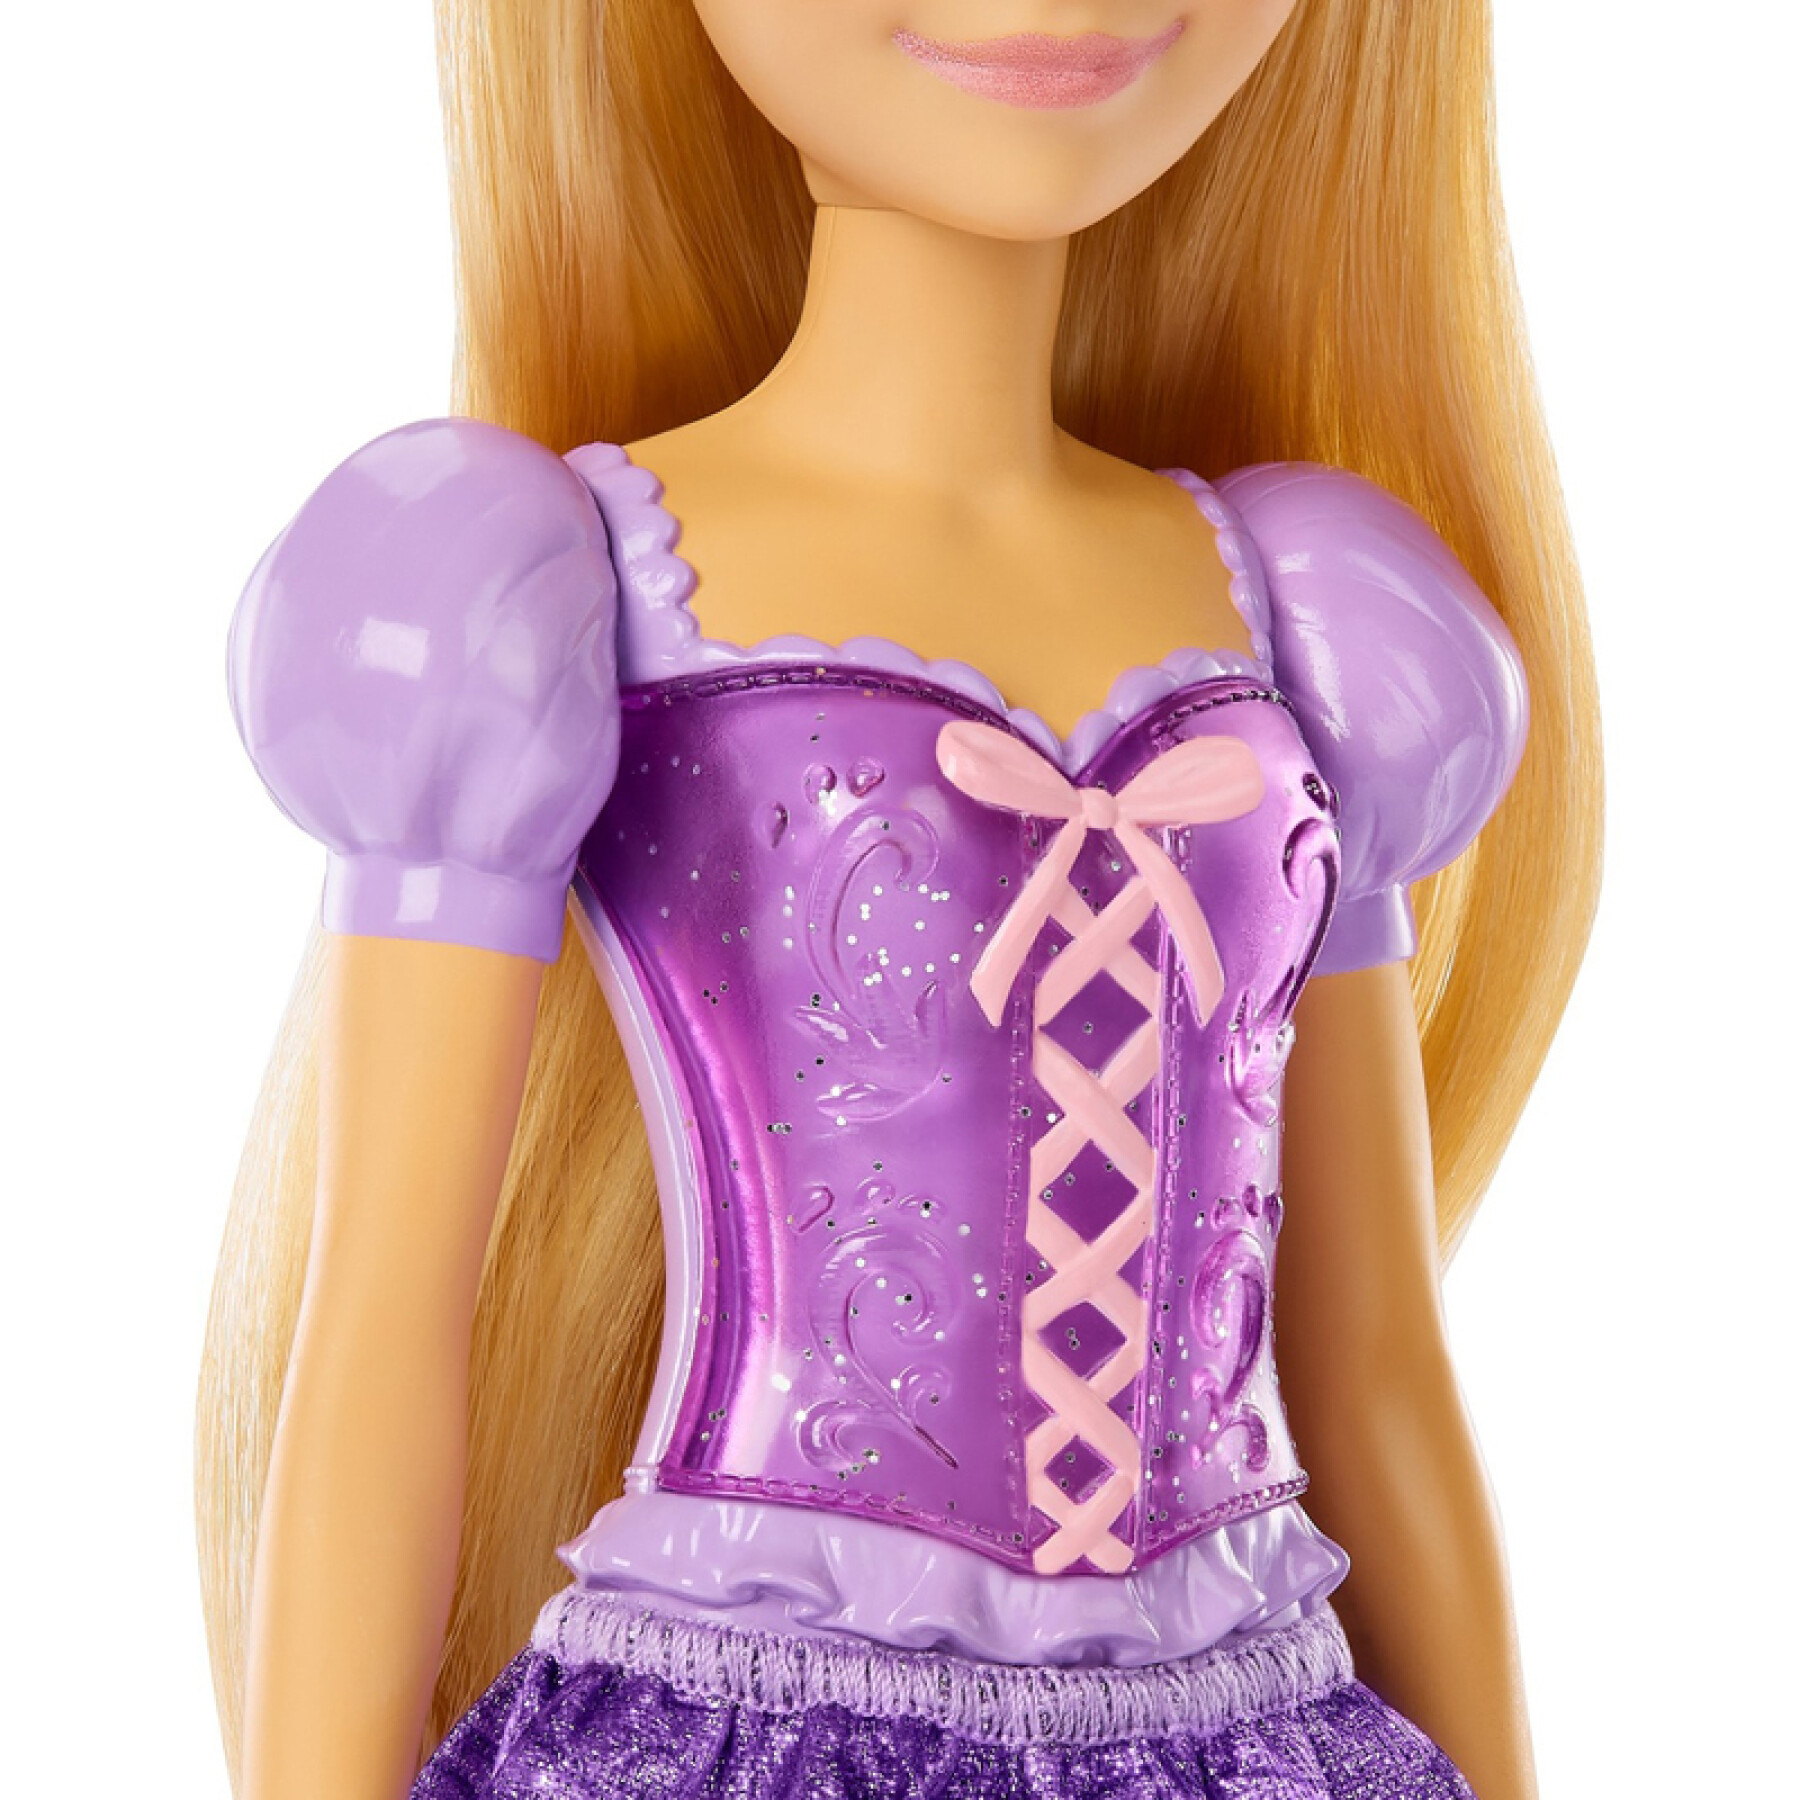 Doll Mattel France Prncss Raiponce